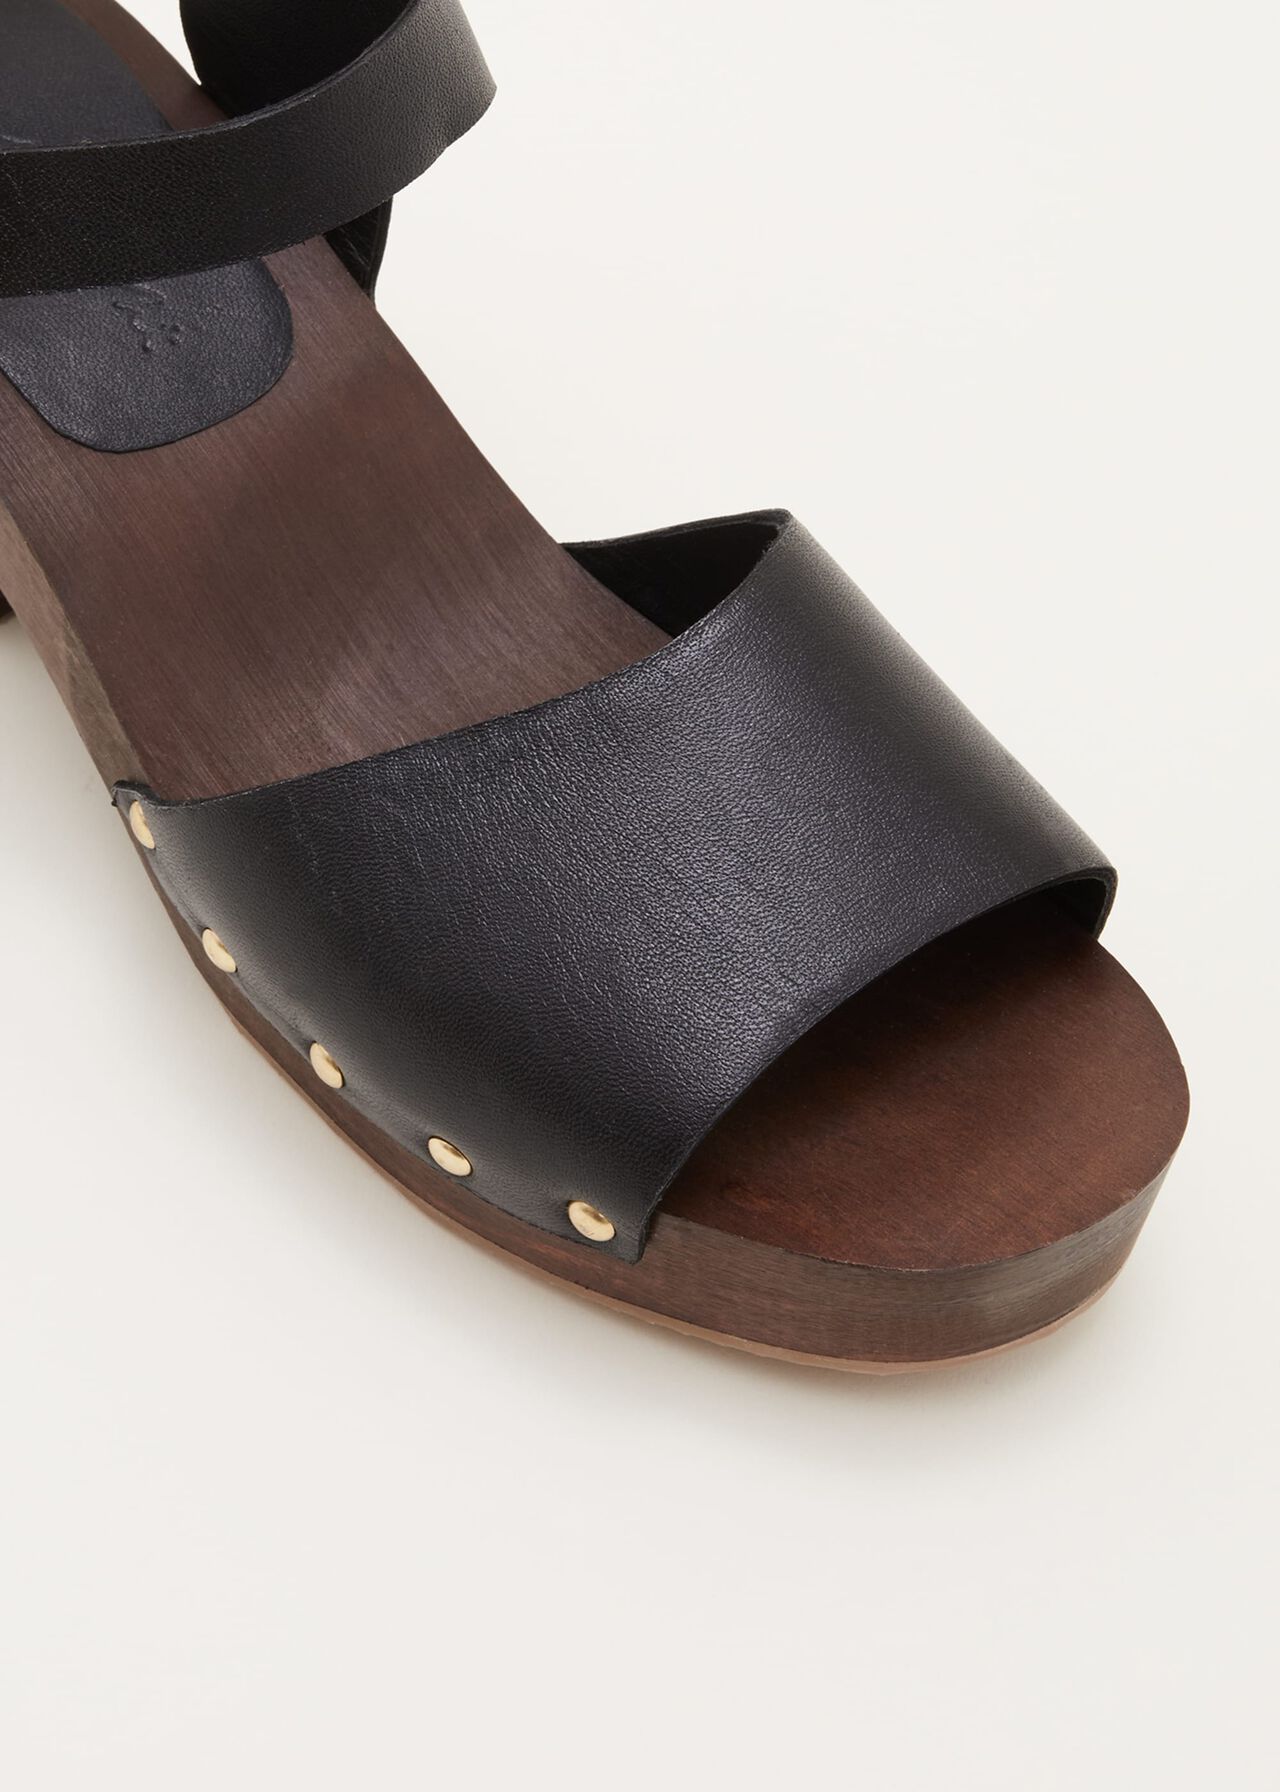 Leather Heel Sandal Clog